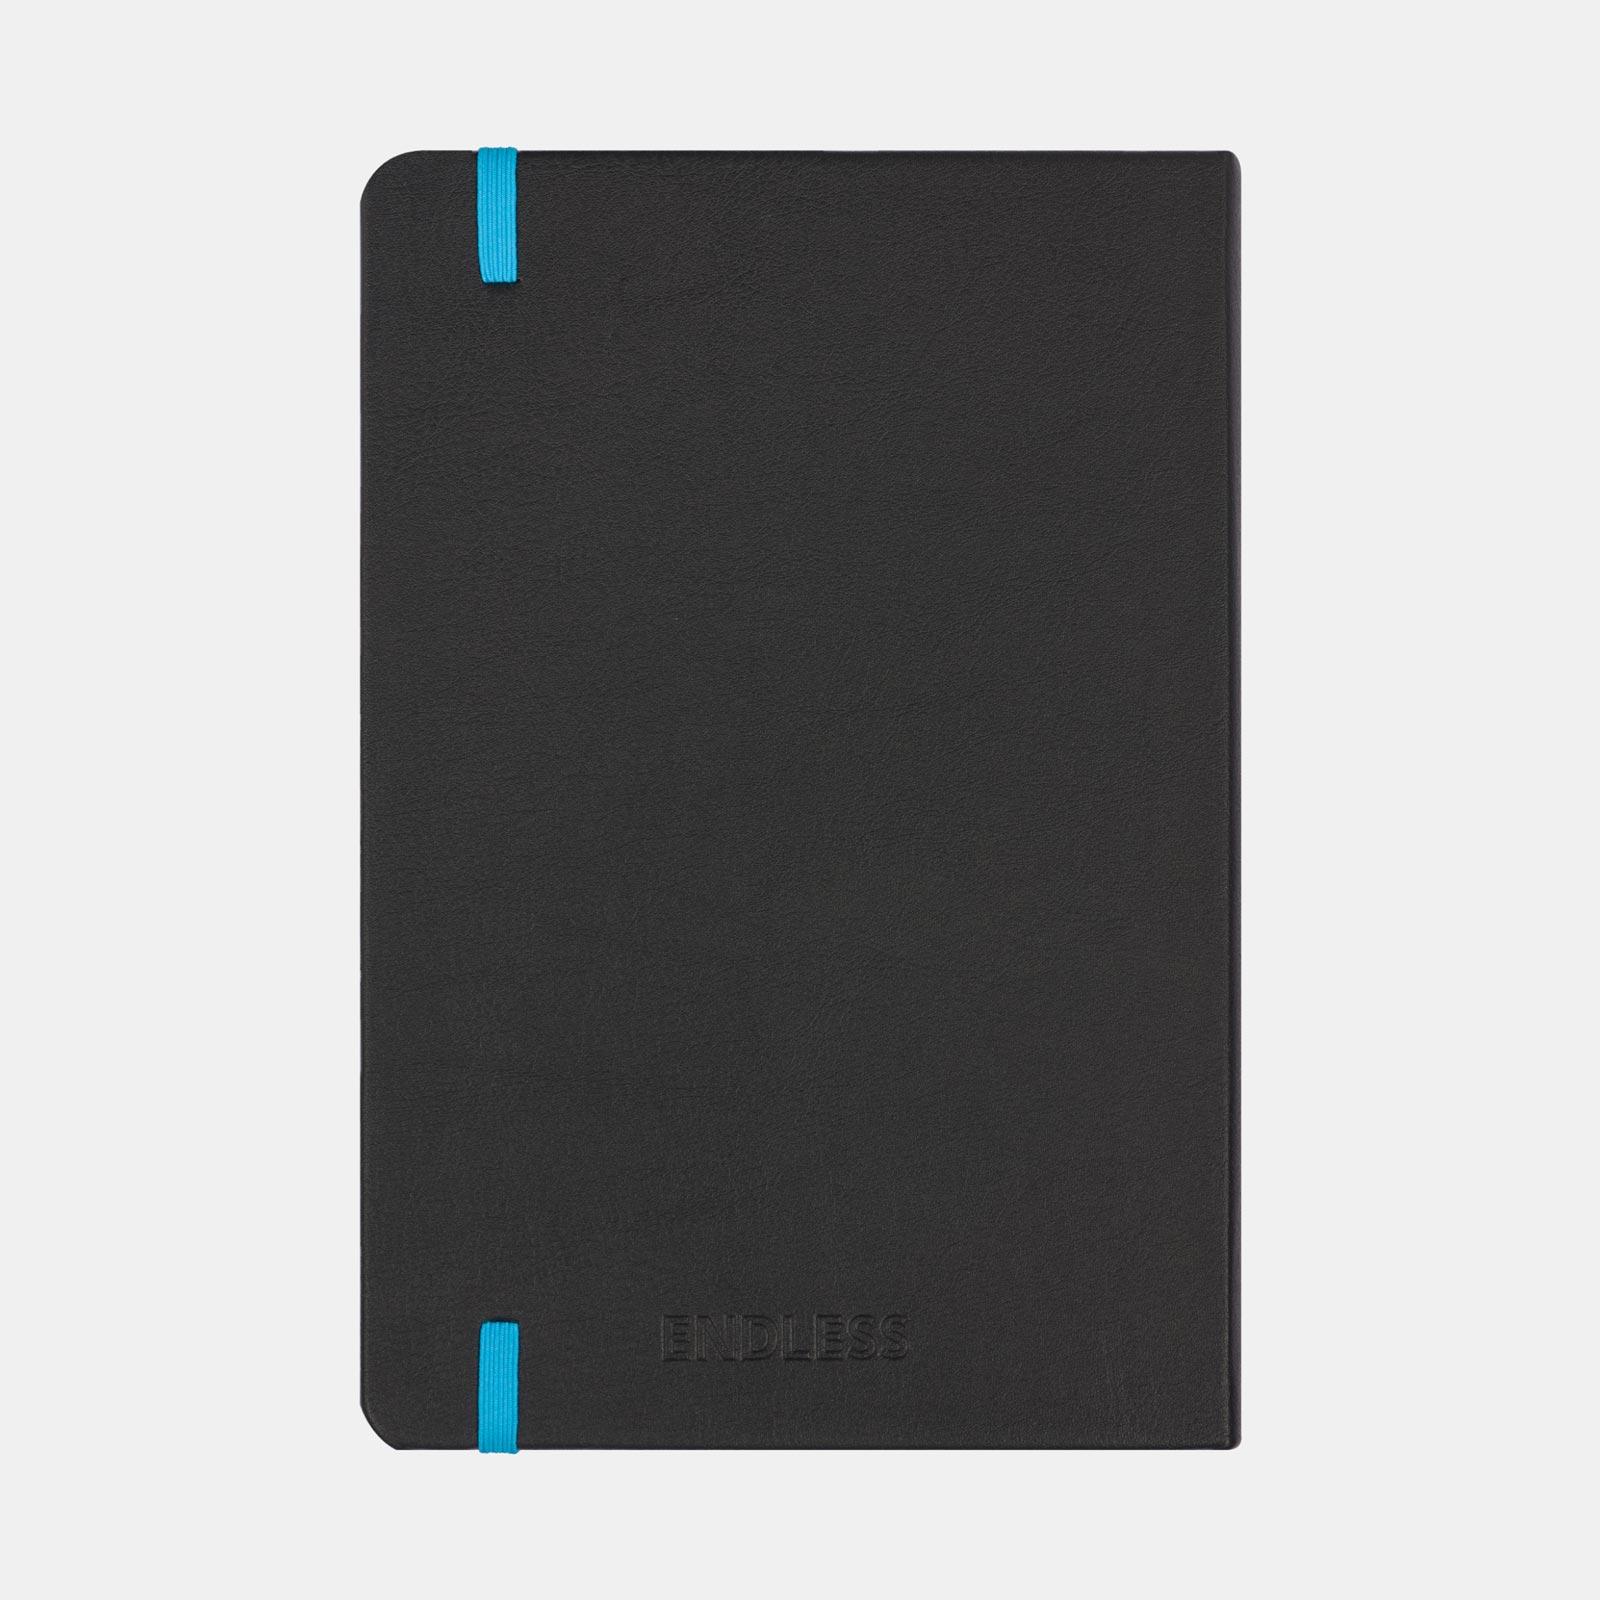 Endless Recorder Notebook Infinite Space Black